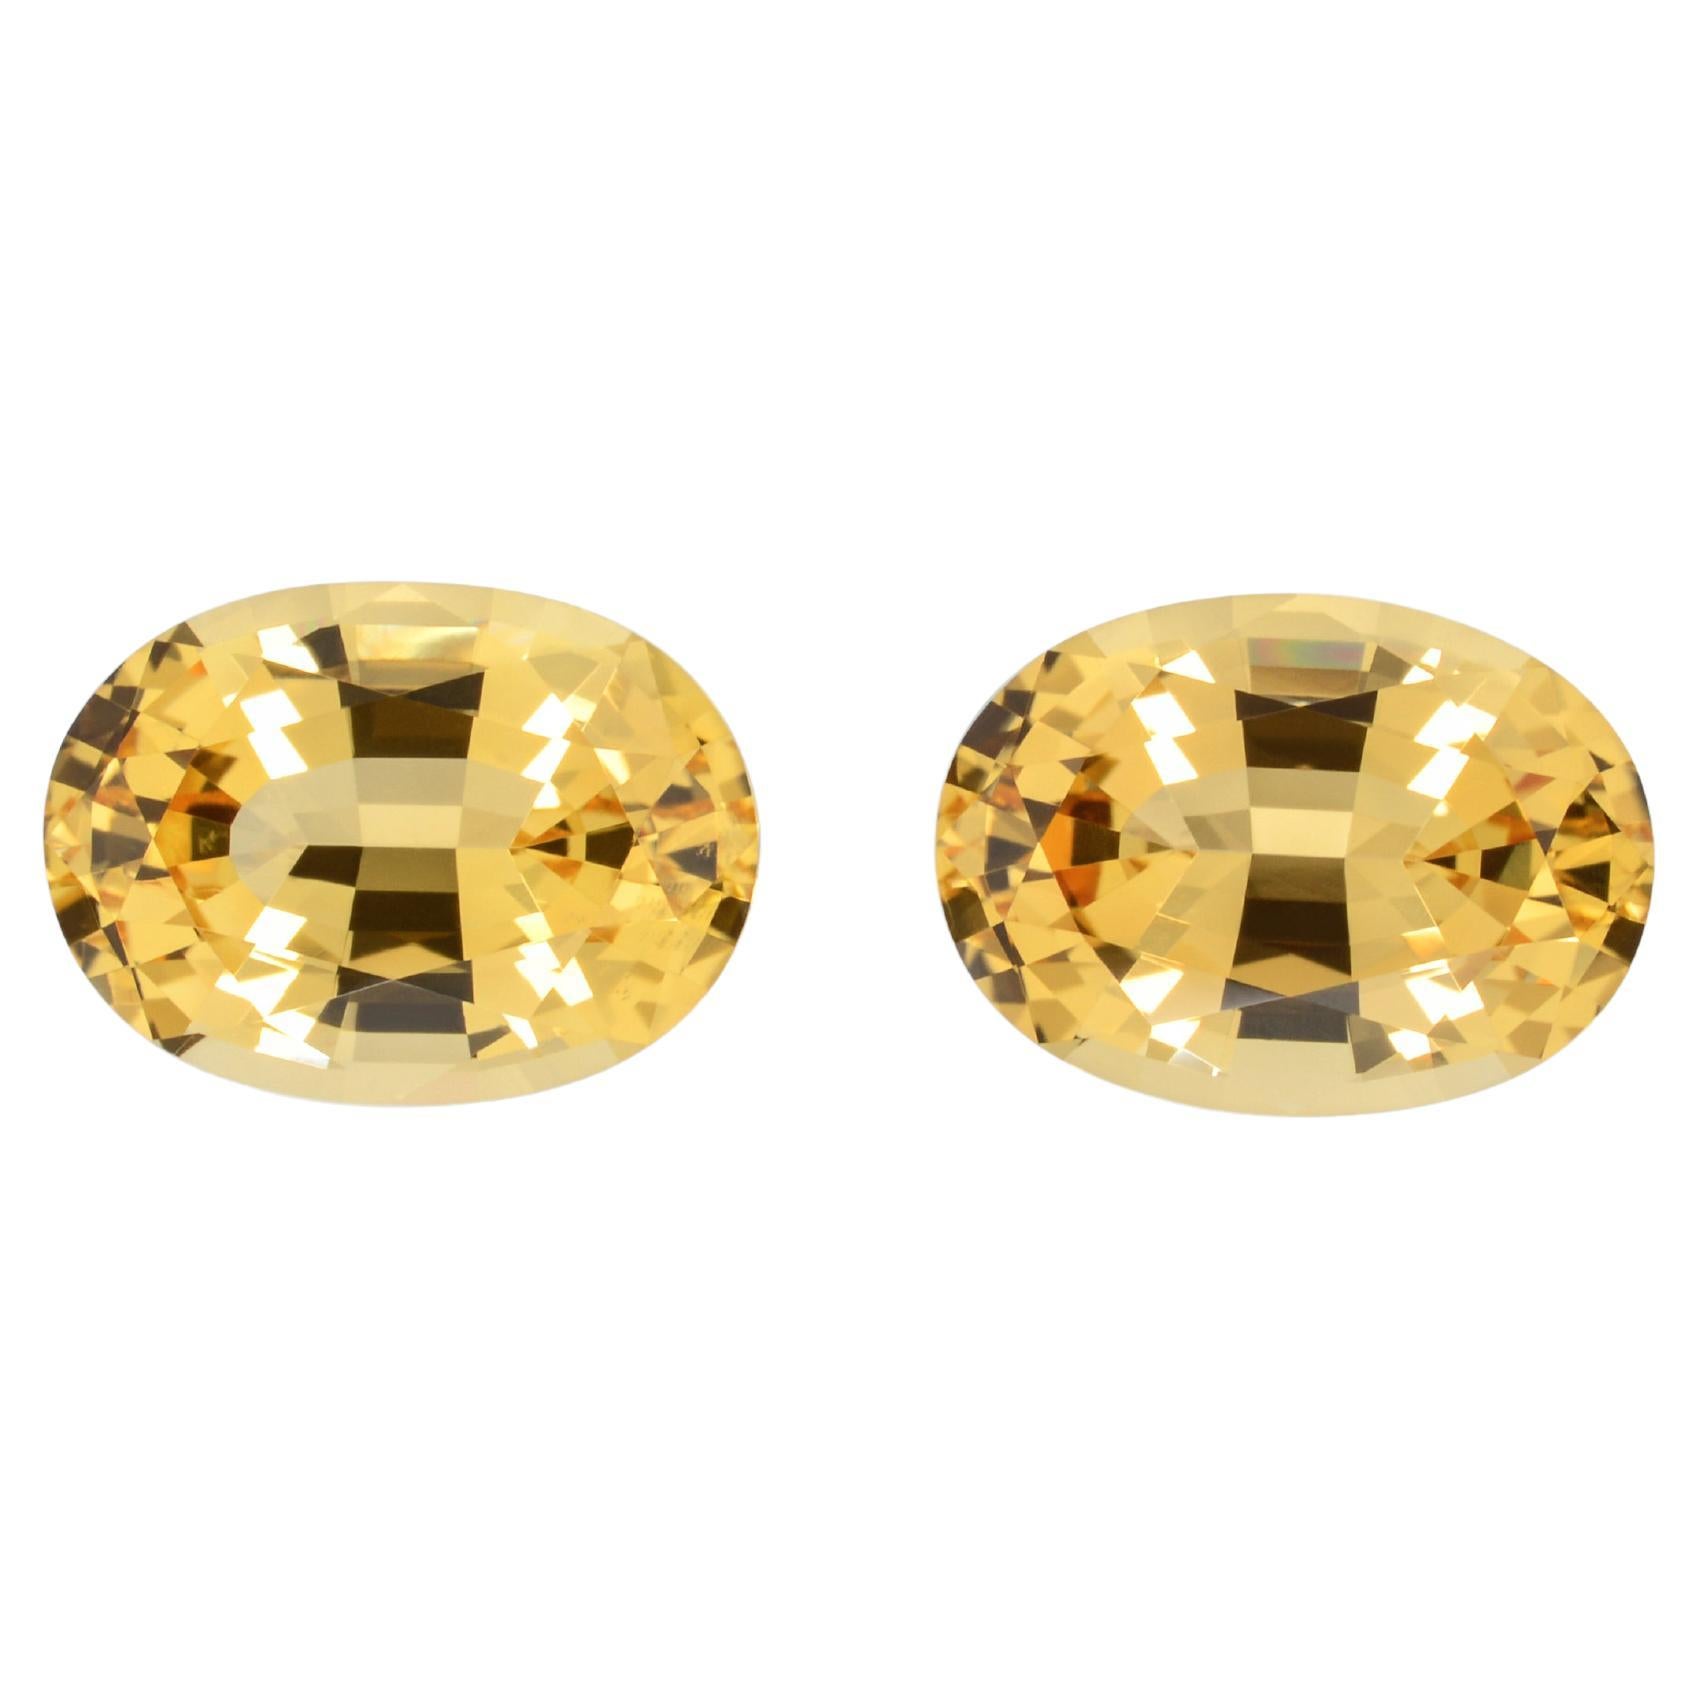 Imperial Topaz Earring Gemstones 8.26 Carats Oval Brazilian Loose Gems